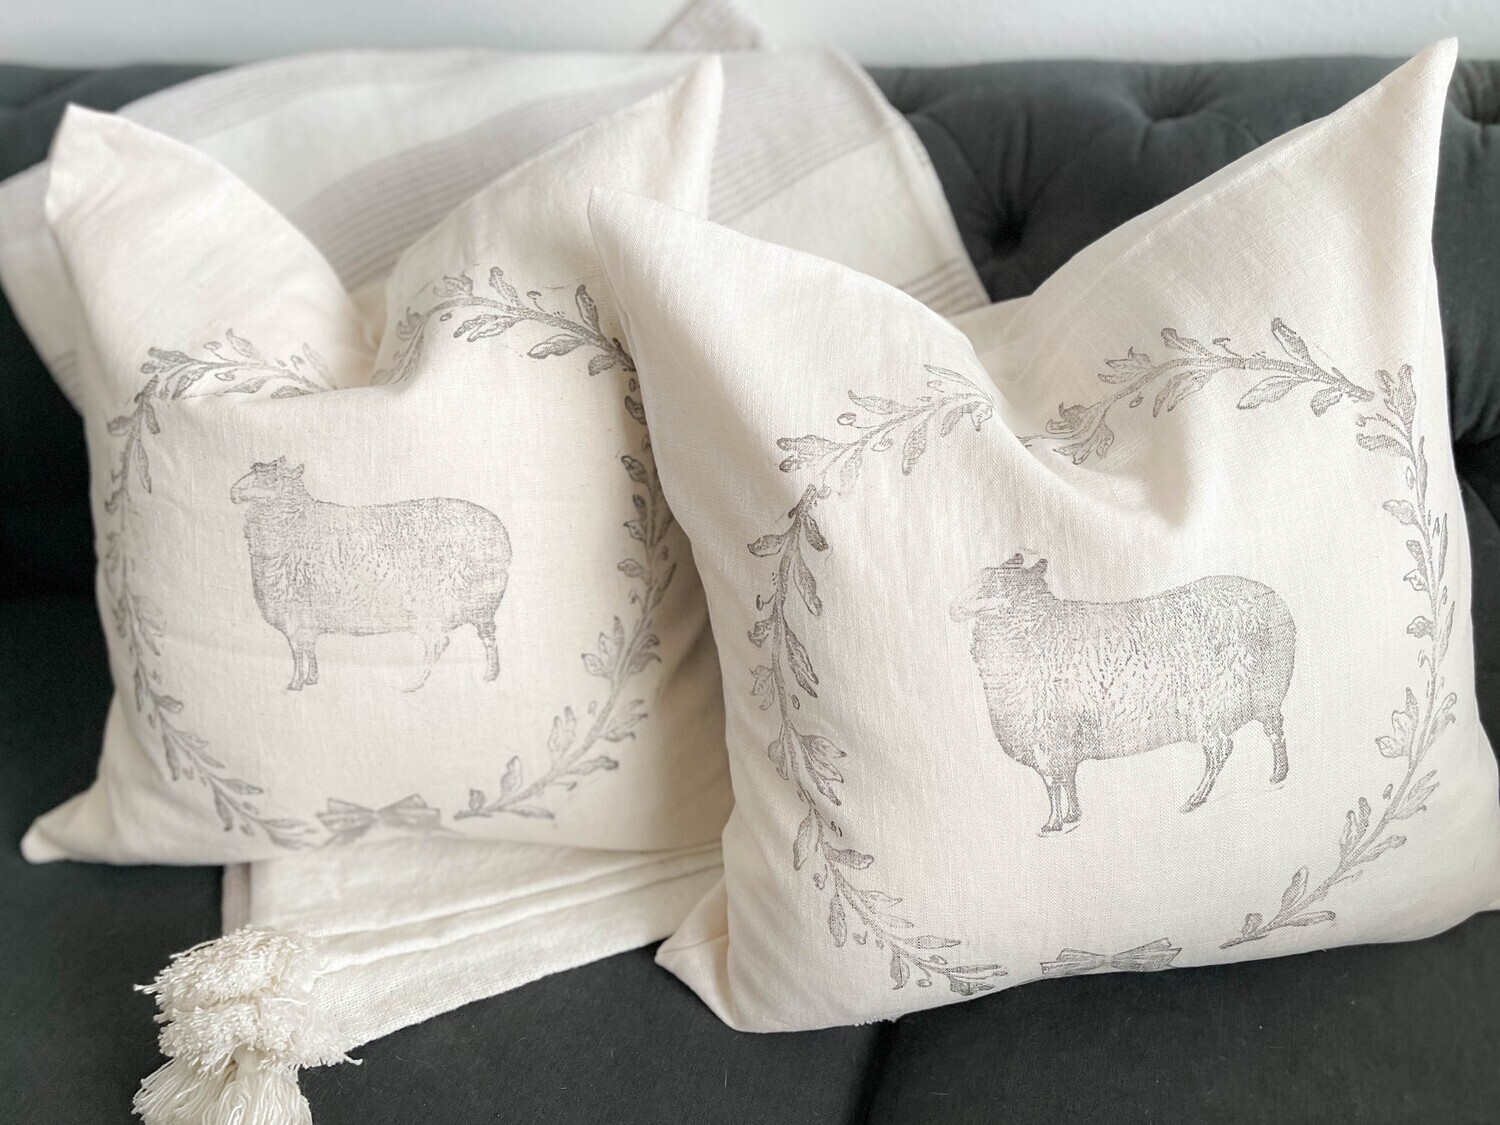 Wreath & Sheep Decorative Throw Pillow Cover